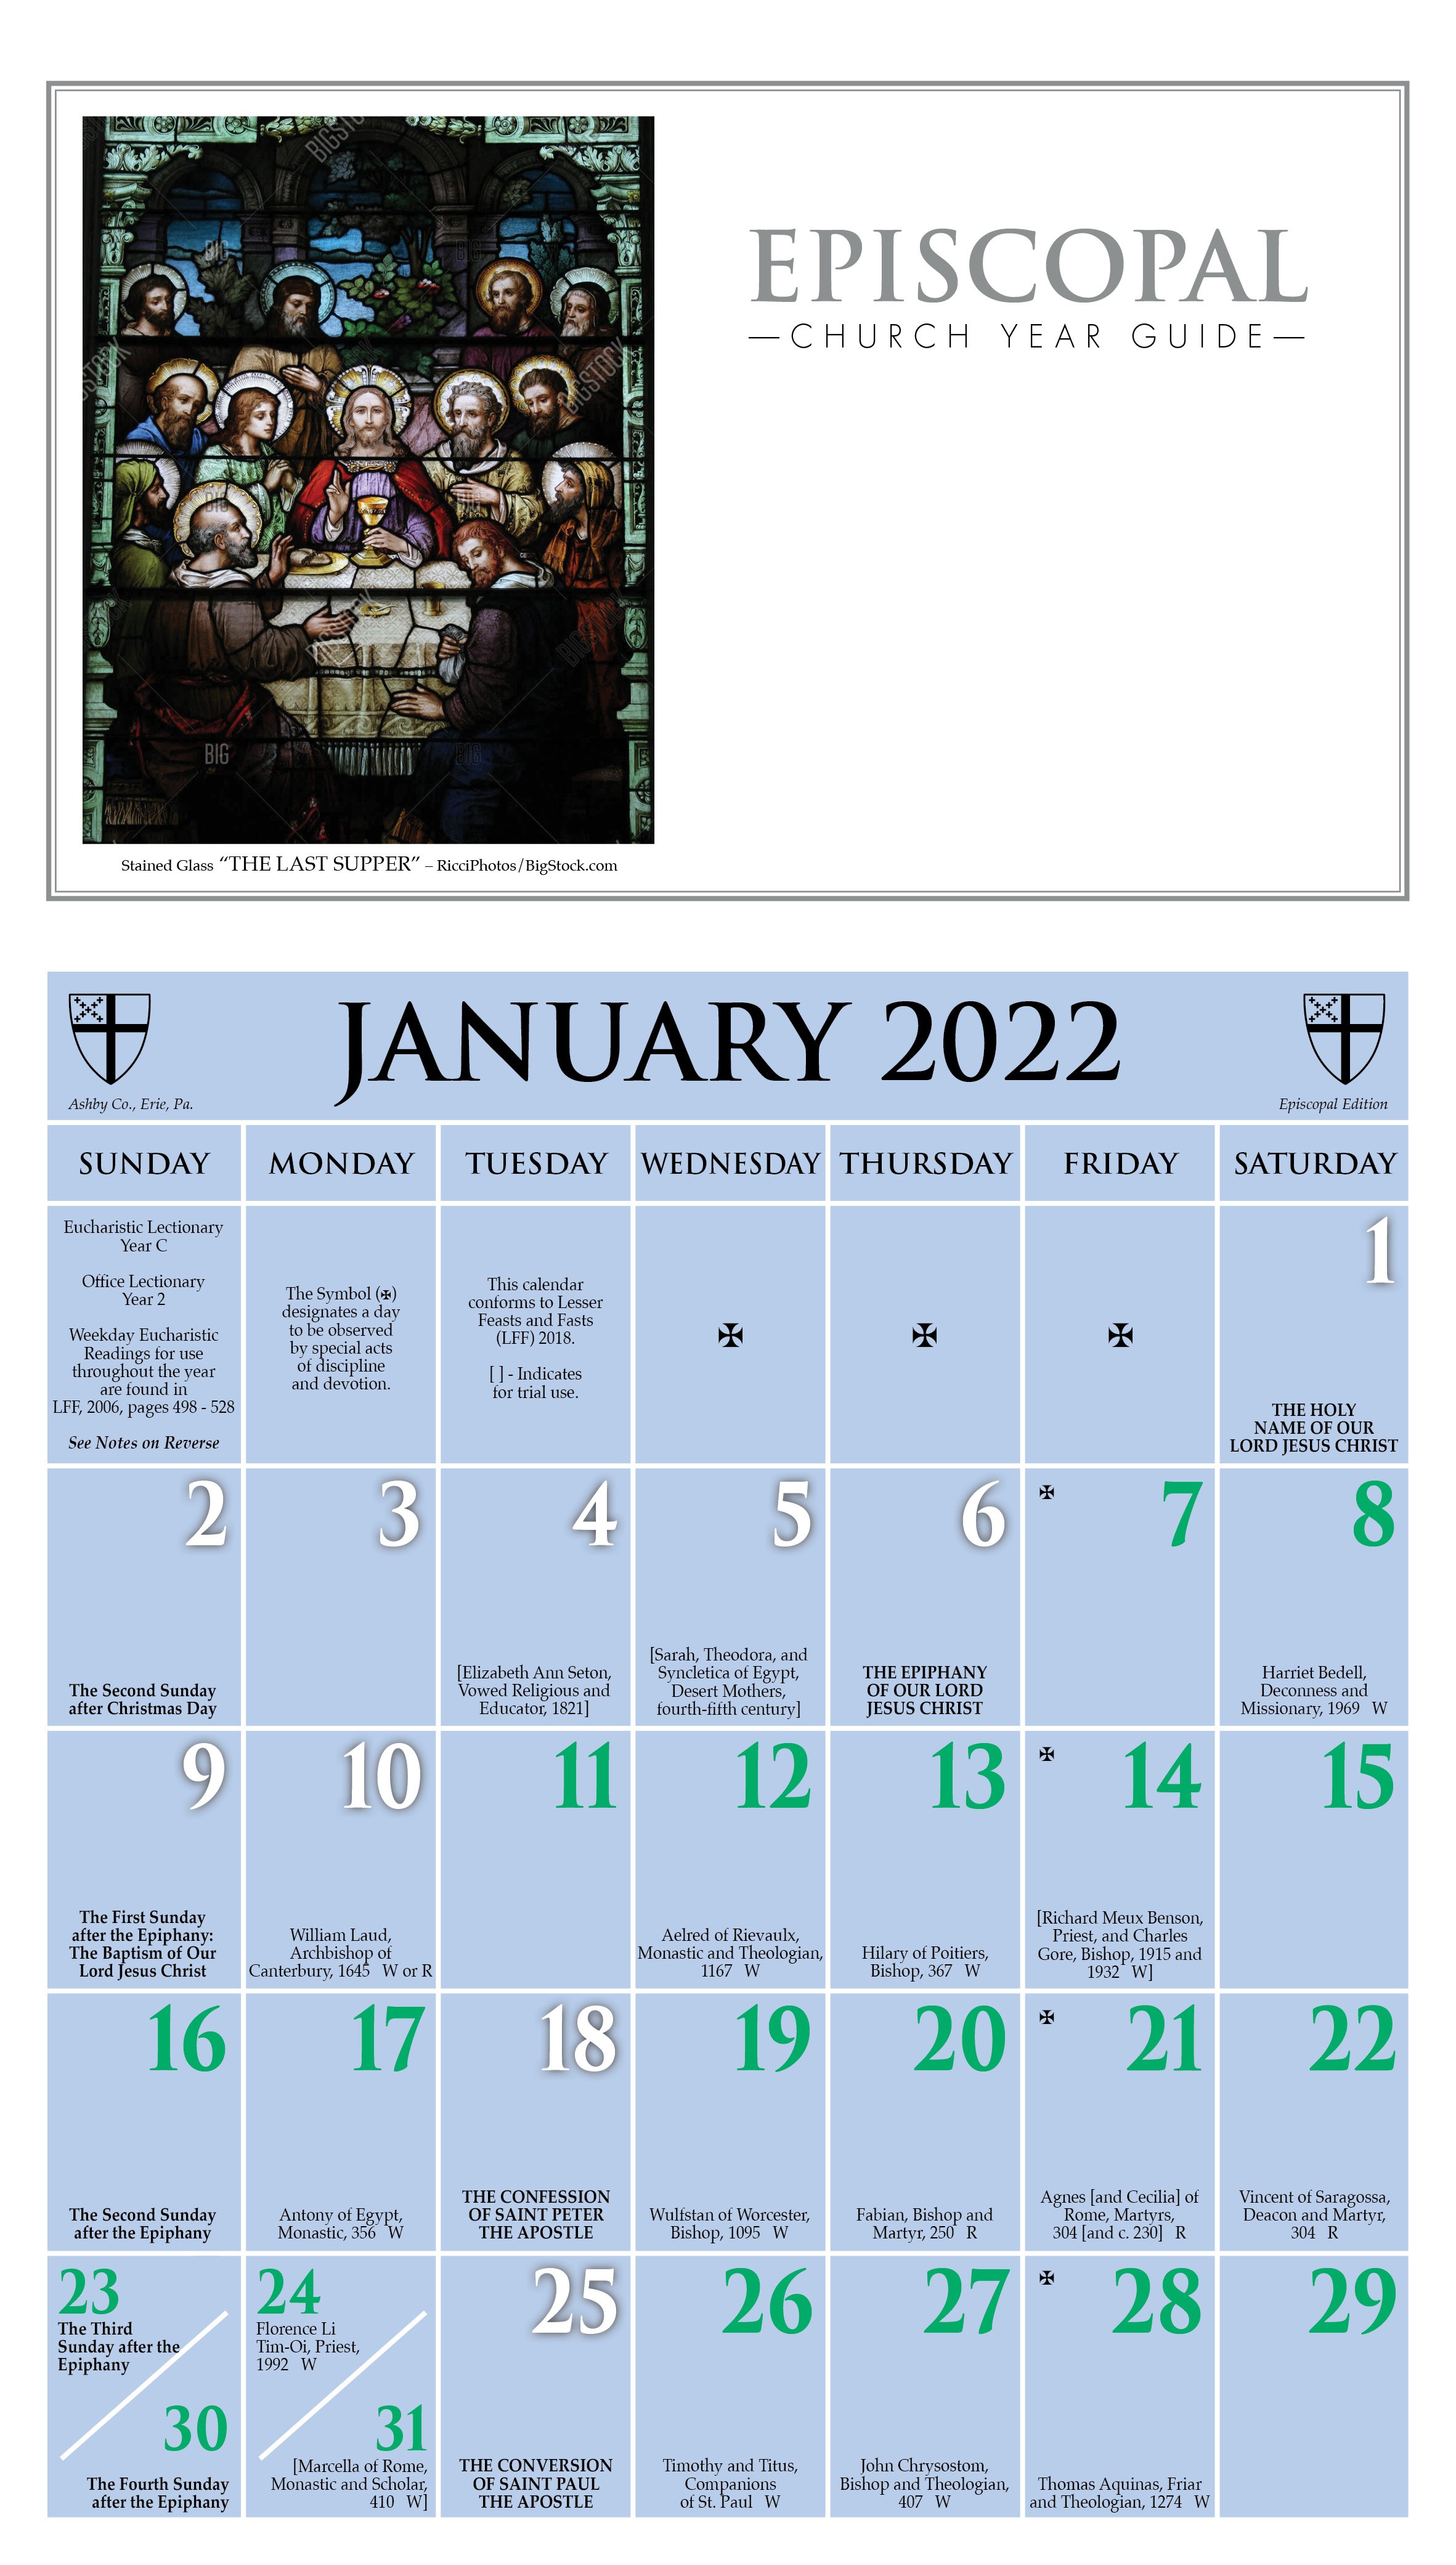 Church Calendar 2022 Churchpublishing.org: 2022 Episcopal Church Year Guide Kalendar